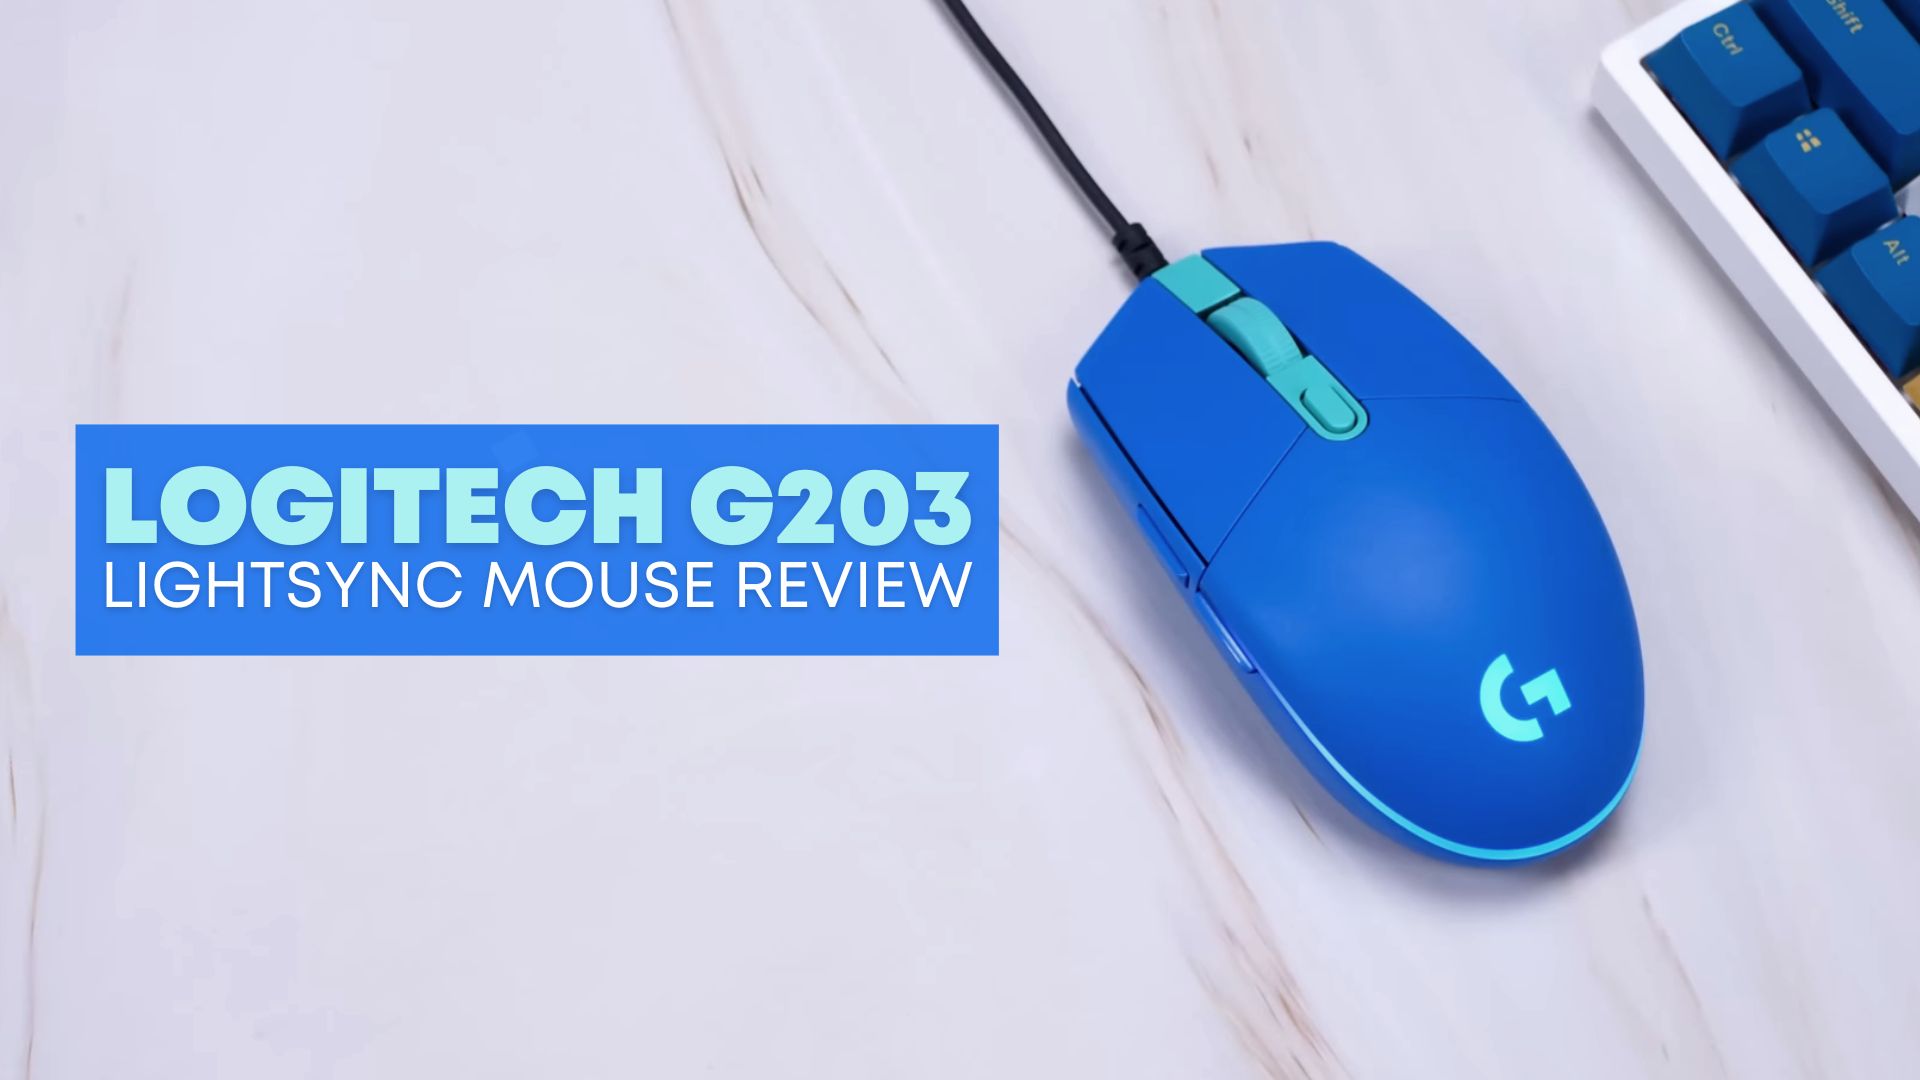 Logitech G203 (G102) Lightsync Mouse Review